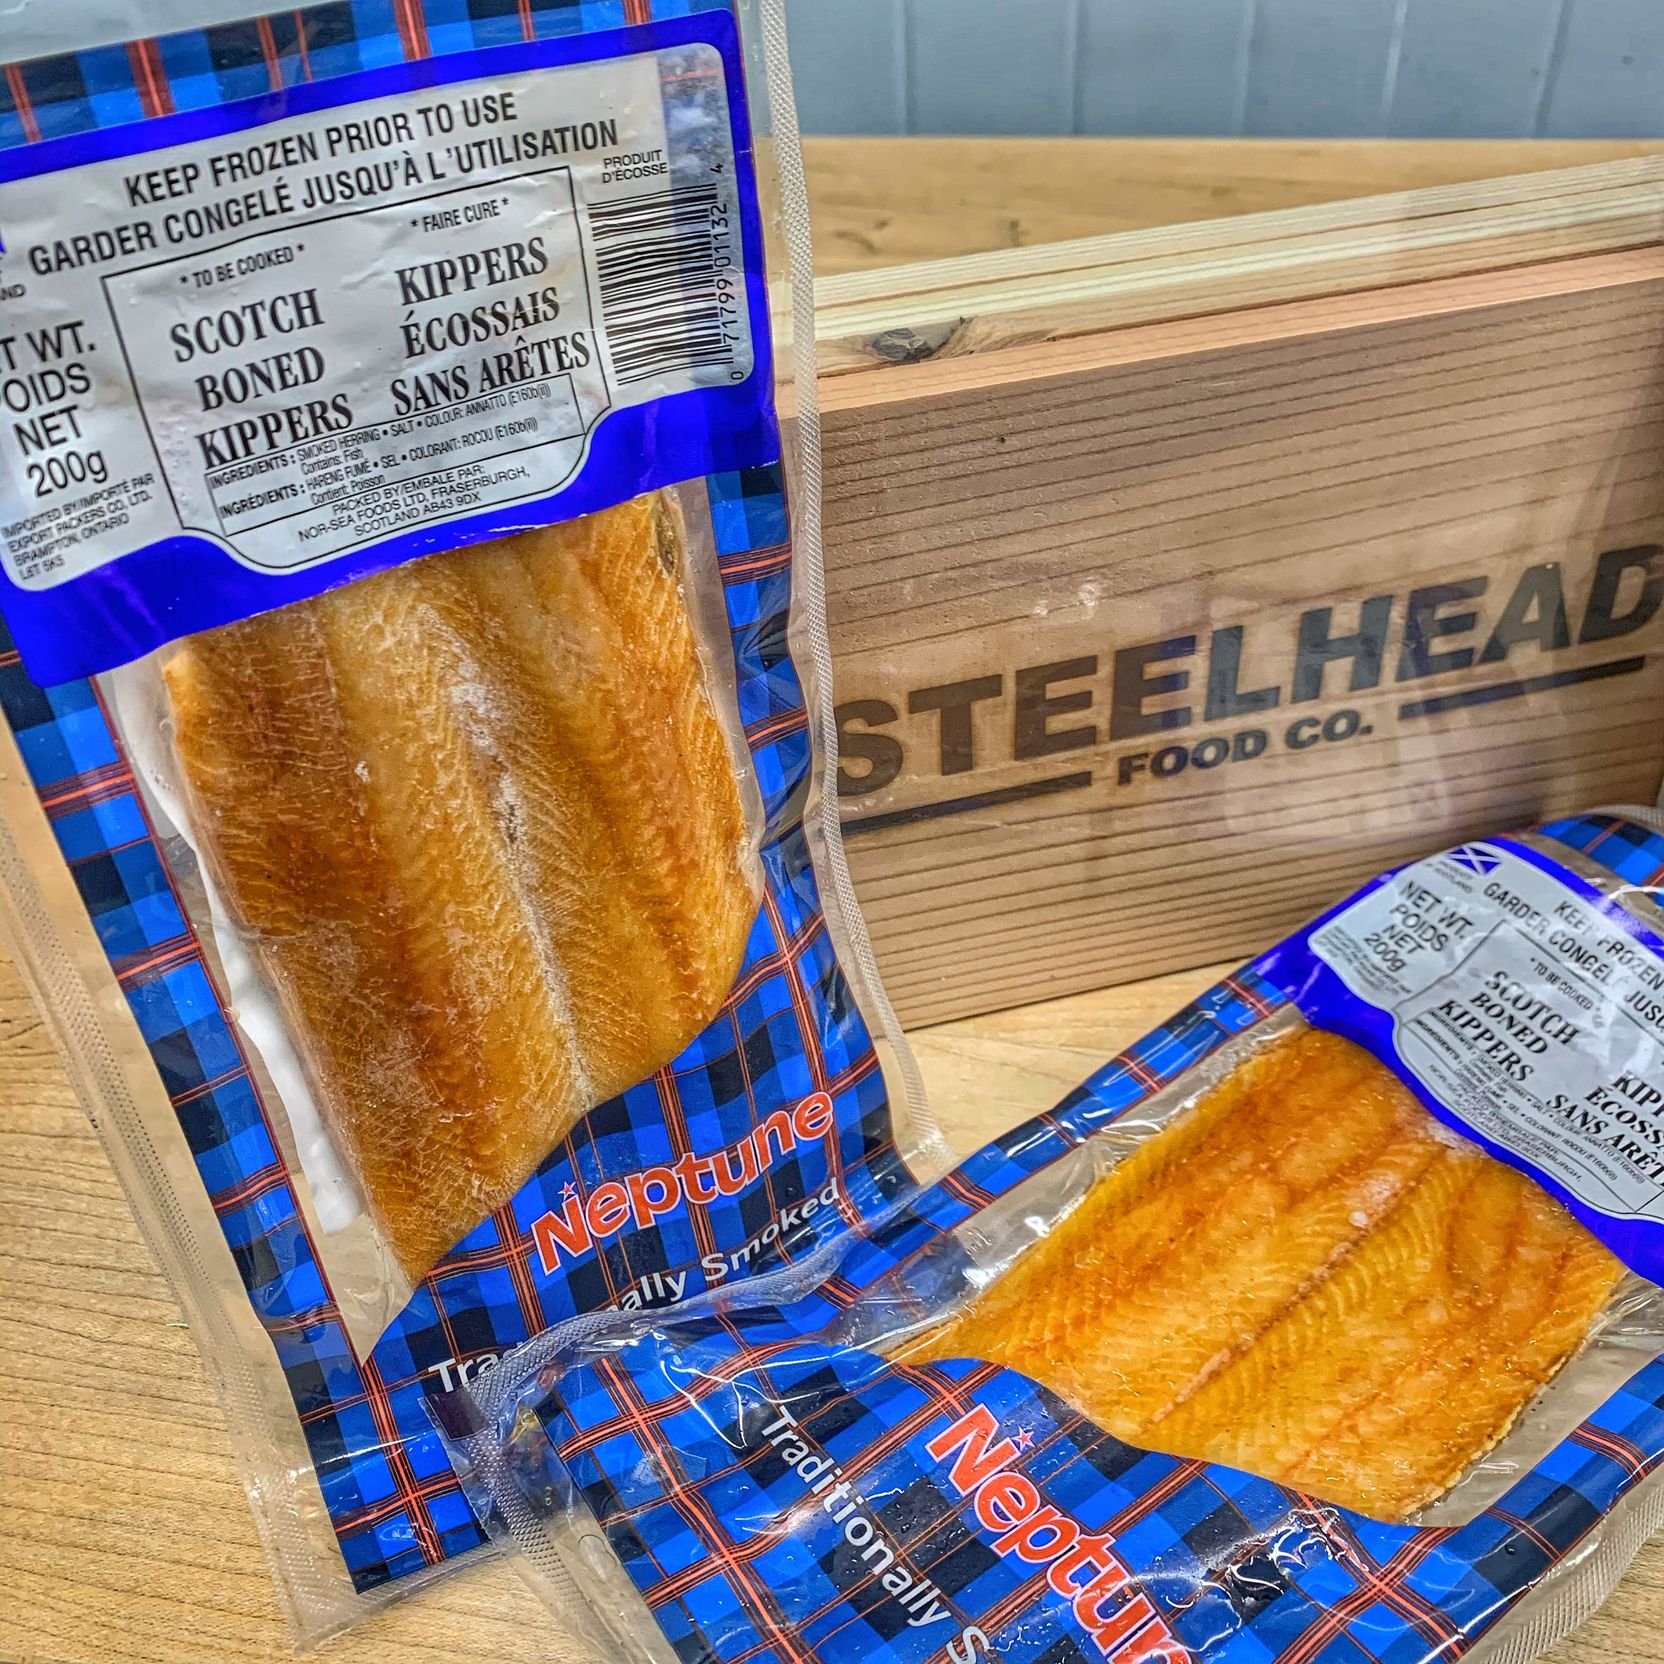 Scotch Boned Smoked Kippers - 200g  - Steelhead Food Co.